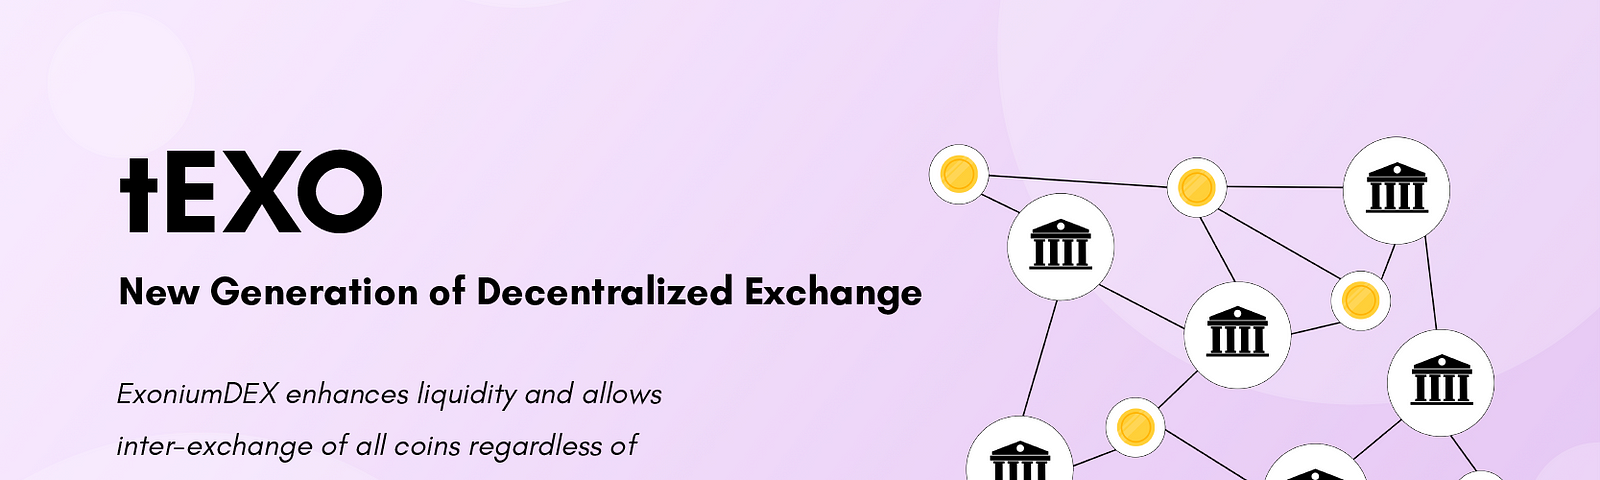 tEXO — New Generation of Decentralized Exchange | Exonium